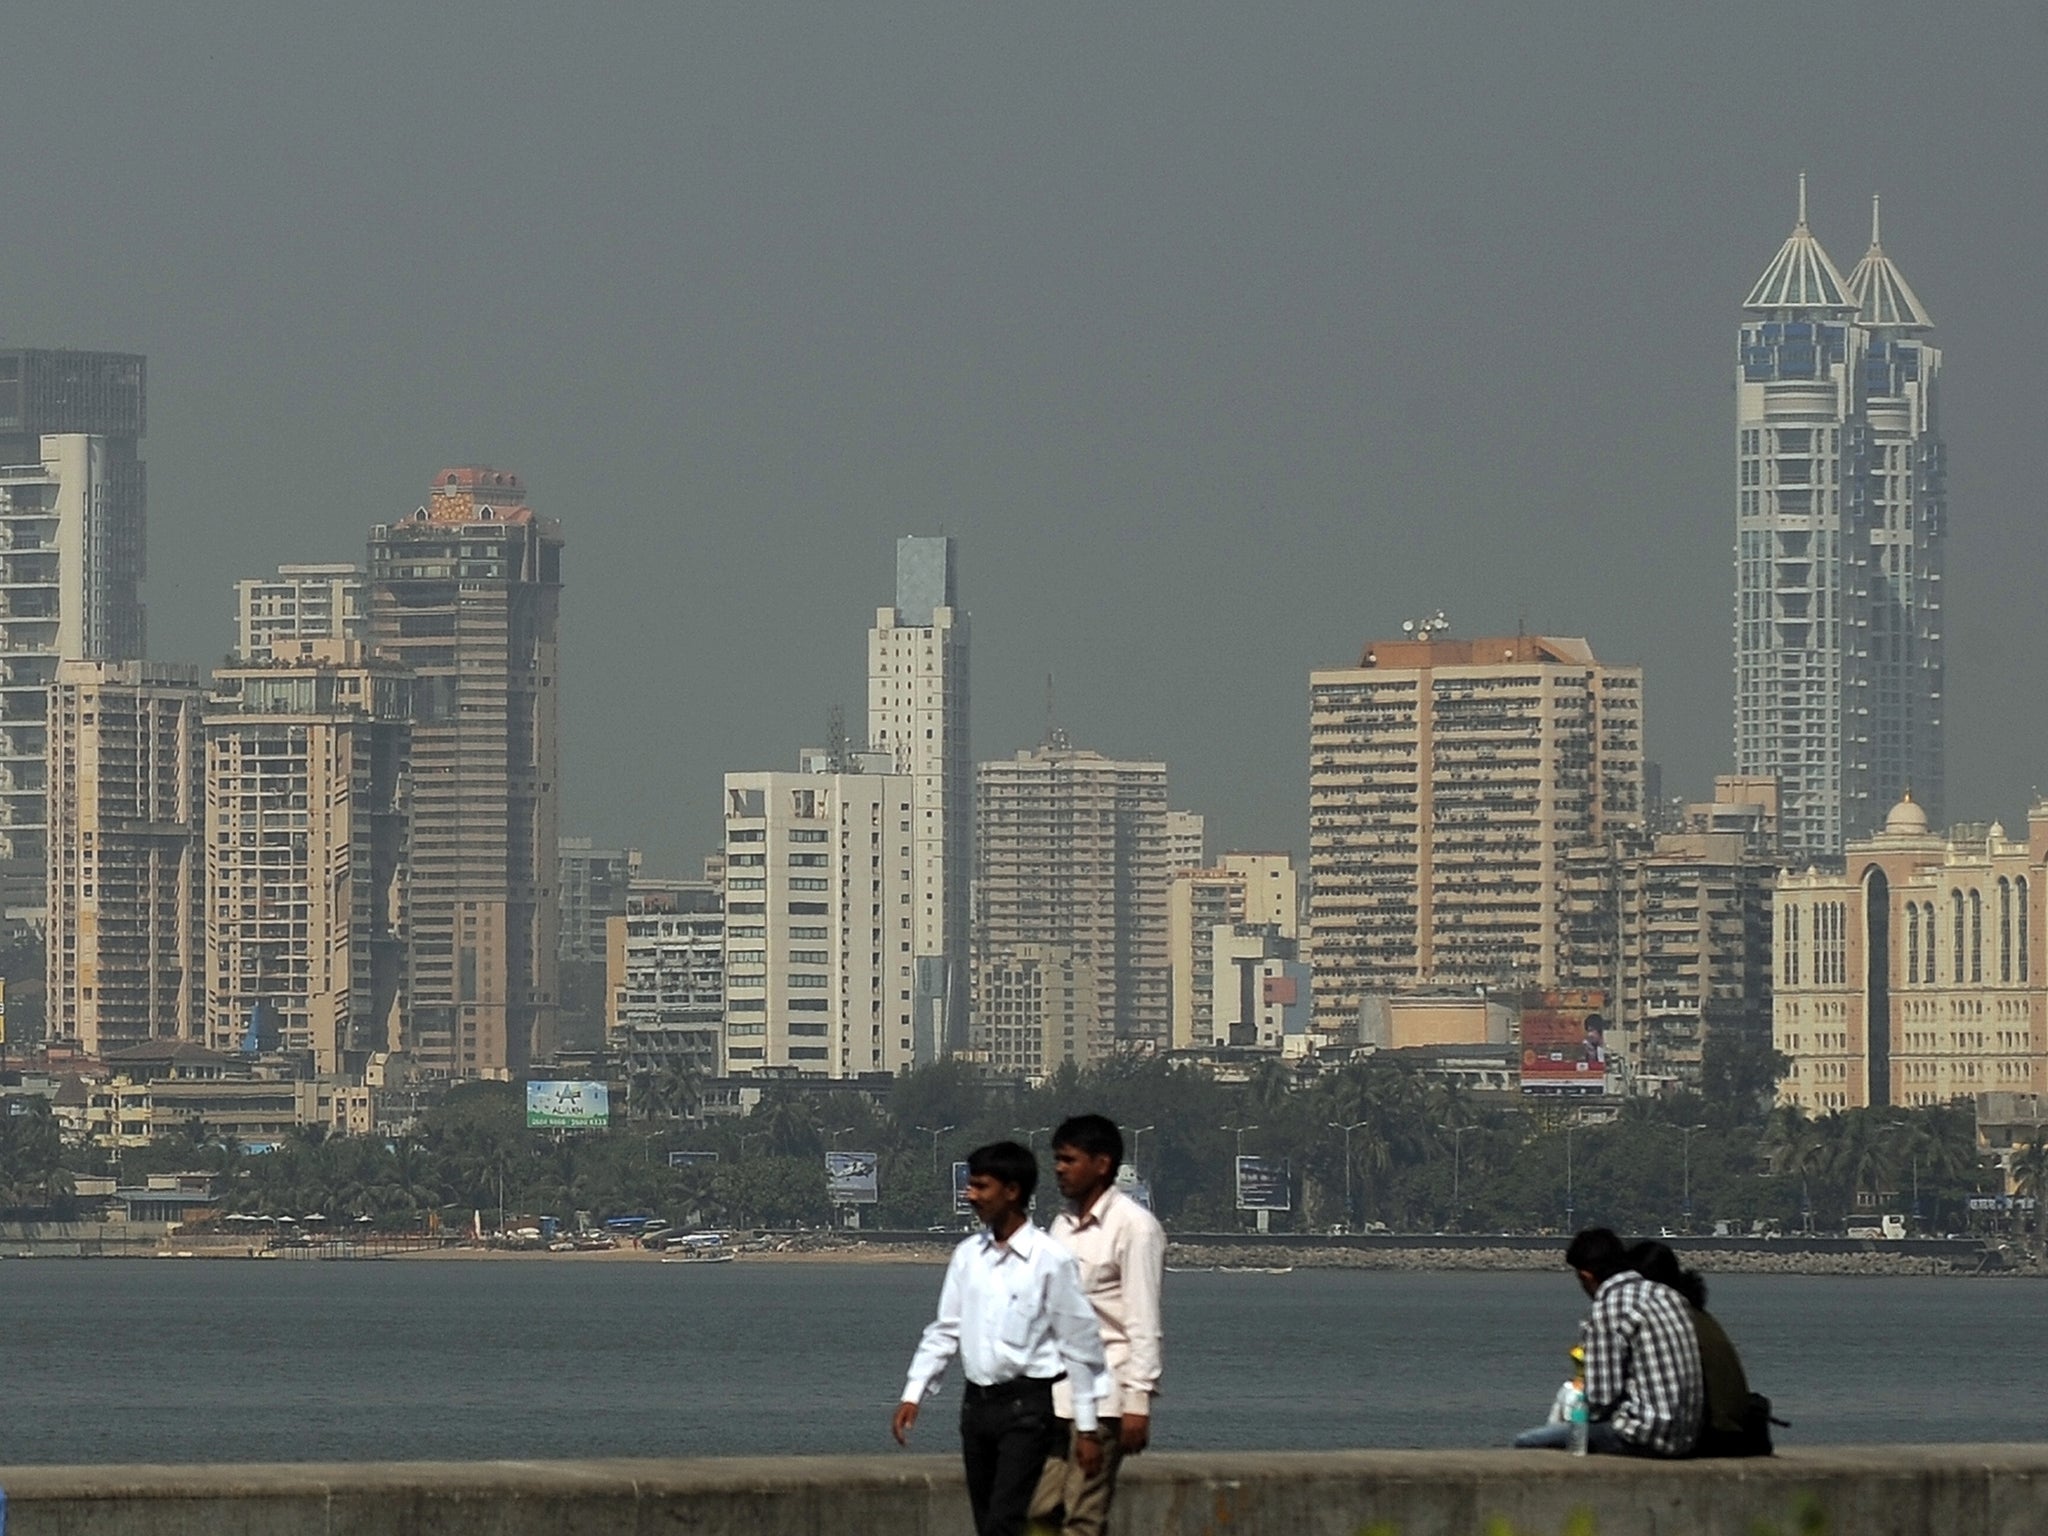 The Mumbai city skyline is seen from a seaside promenade in Mumbai